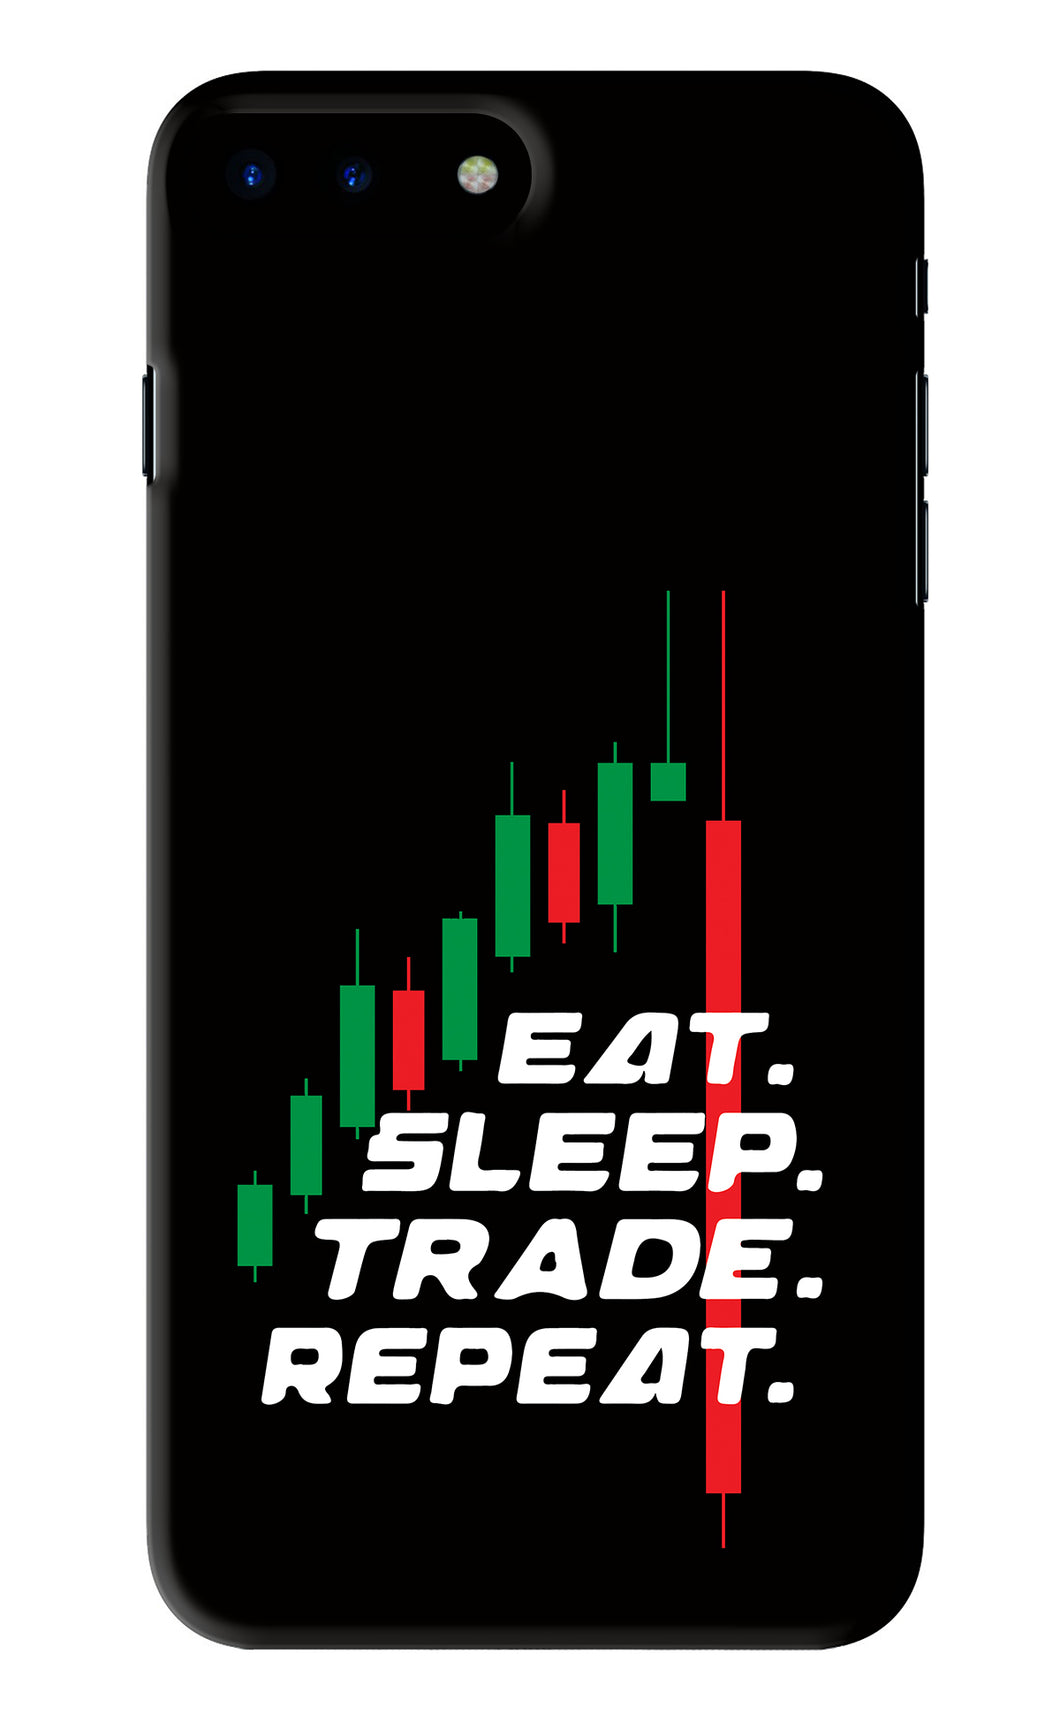 Eat Sleep Trade Repeat iPhone 8 Plus Back Skin Wrap